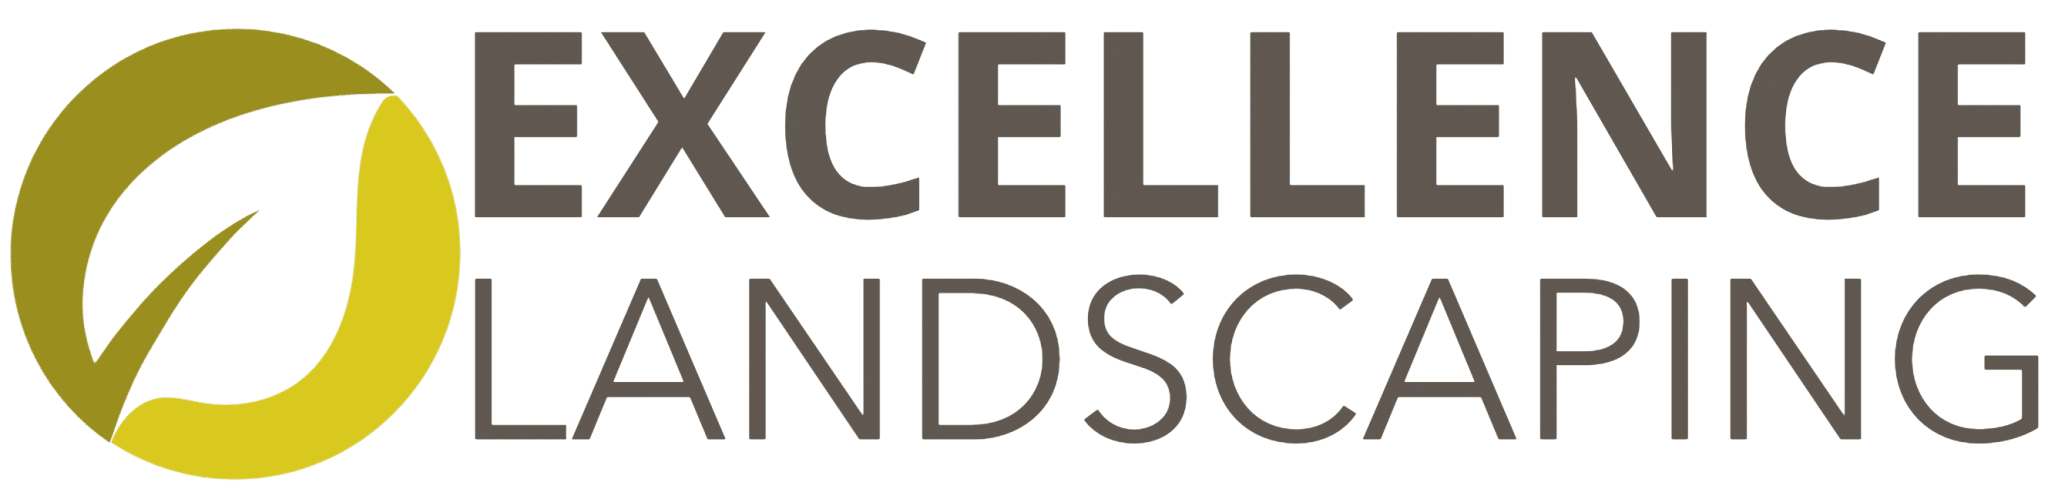 Excellence Landscape Logo